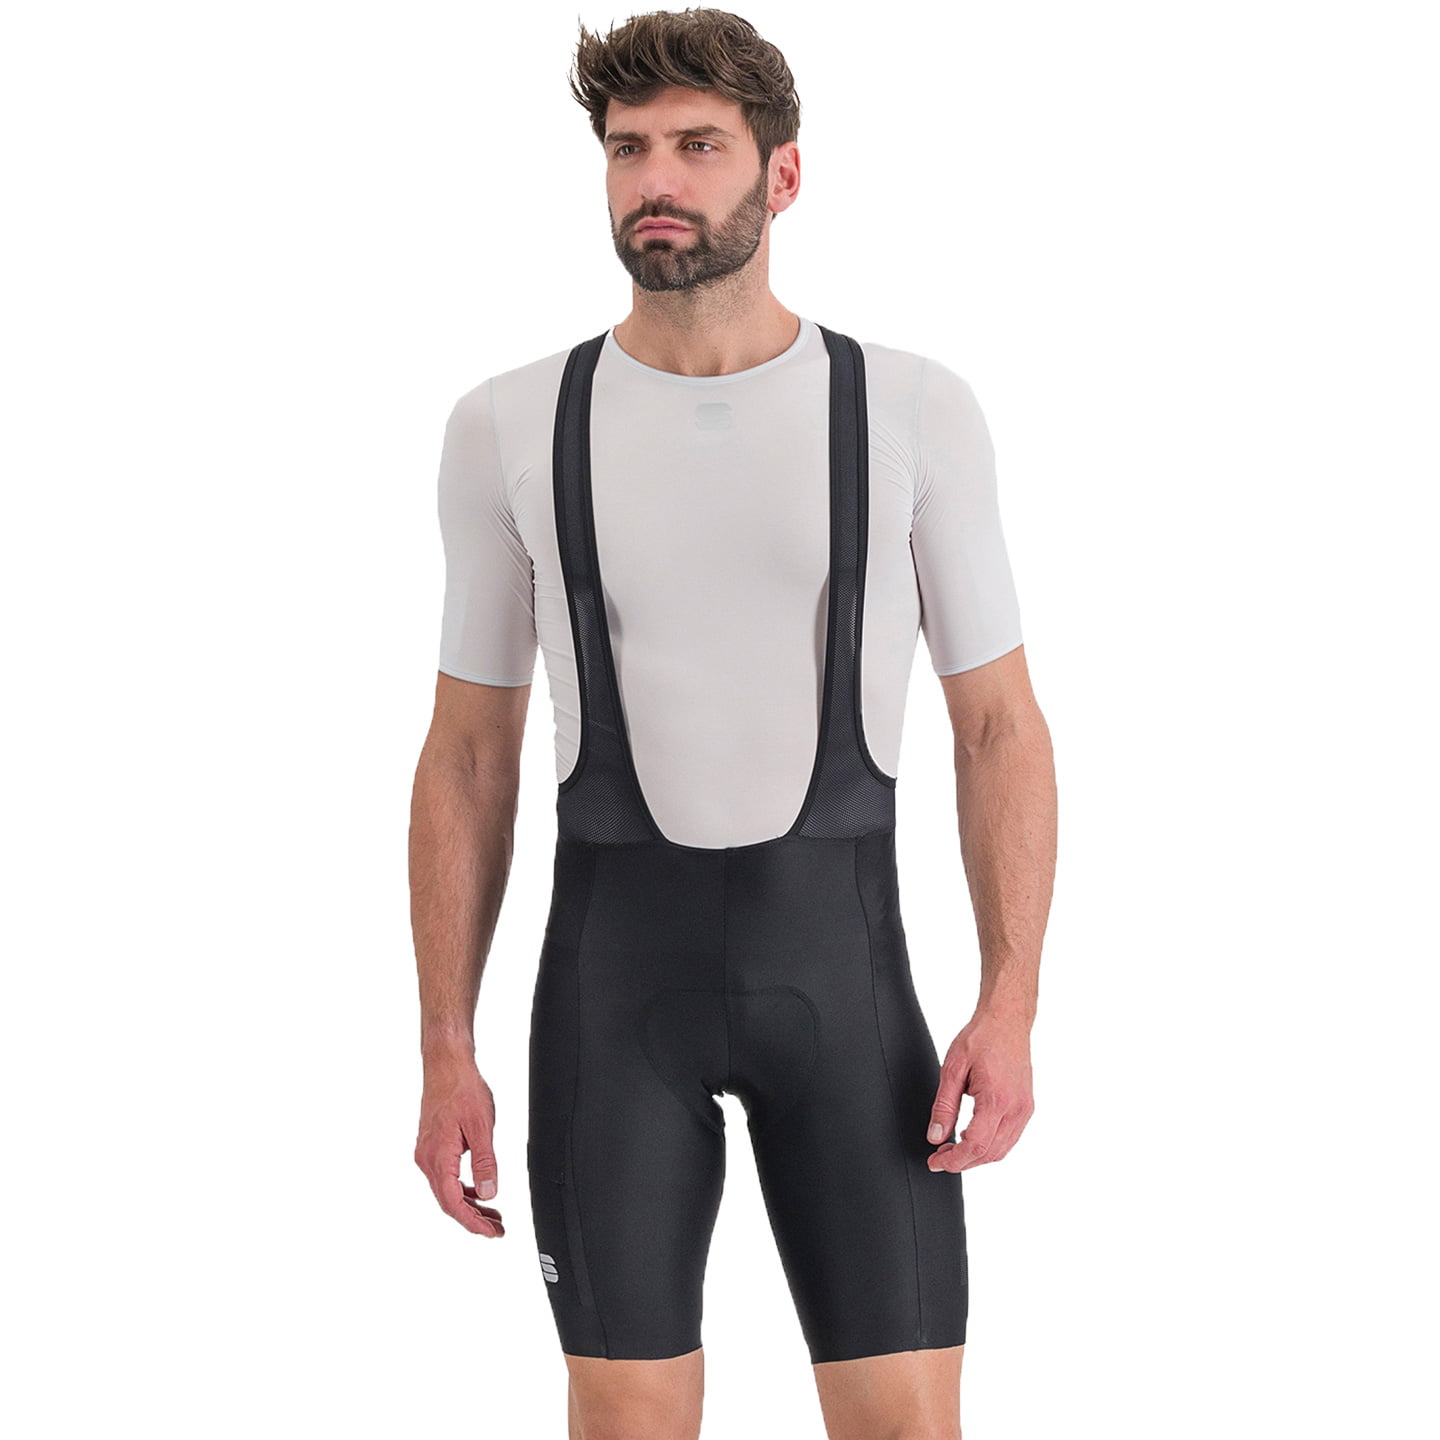 SPORTFUL Giara Bib Shorts Bib Shorts, for men, size 2XL, Cycle shorts, Cycling clothing